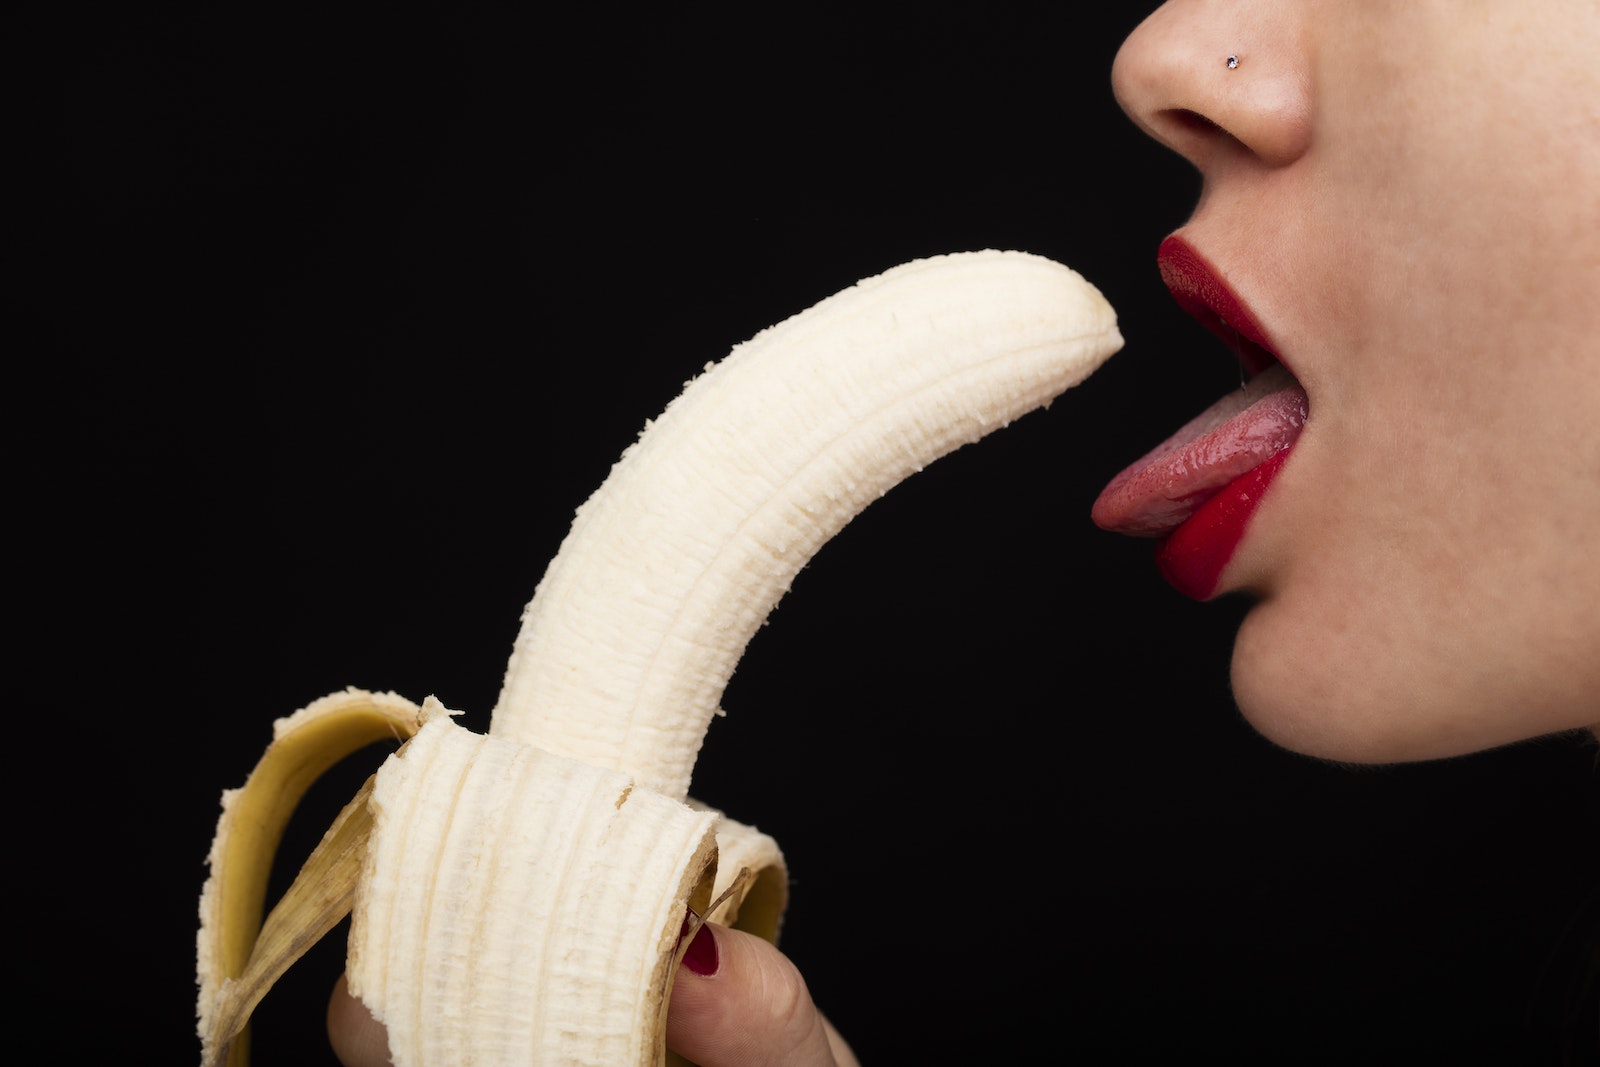 Peeled Banana near a Woman's Mouth